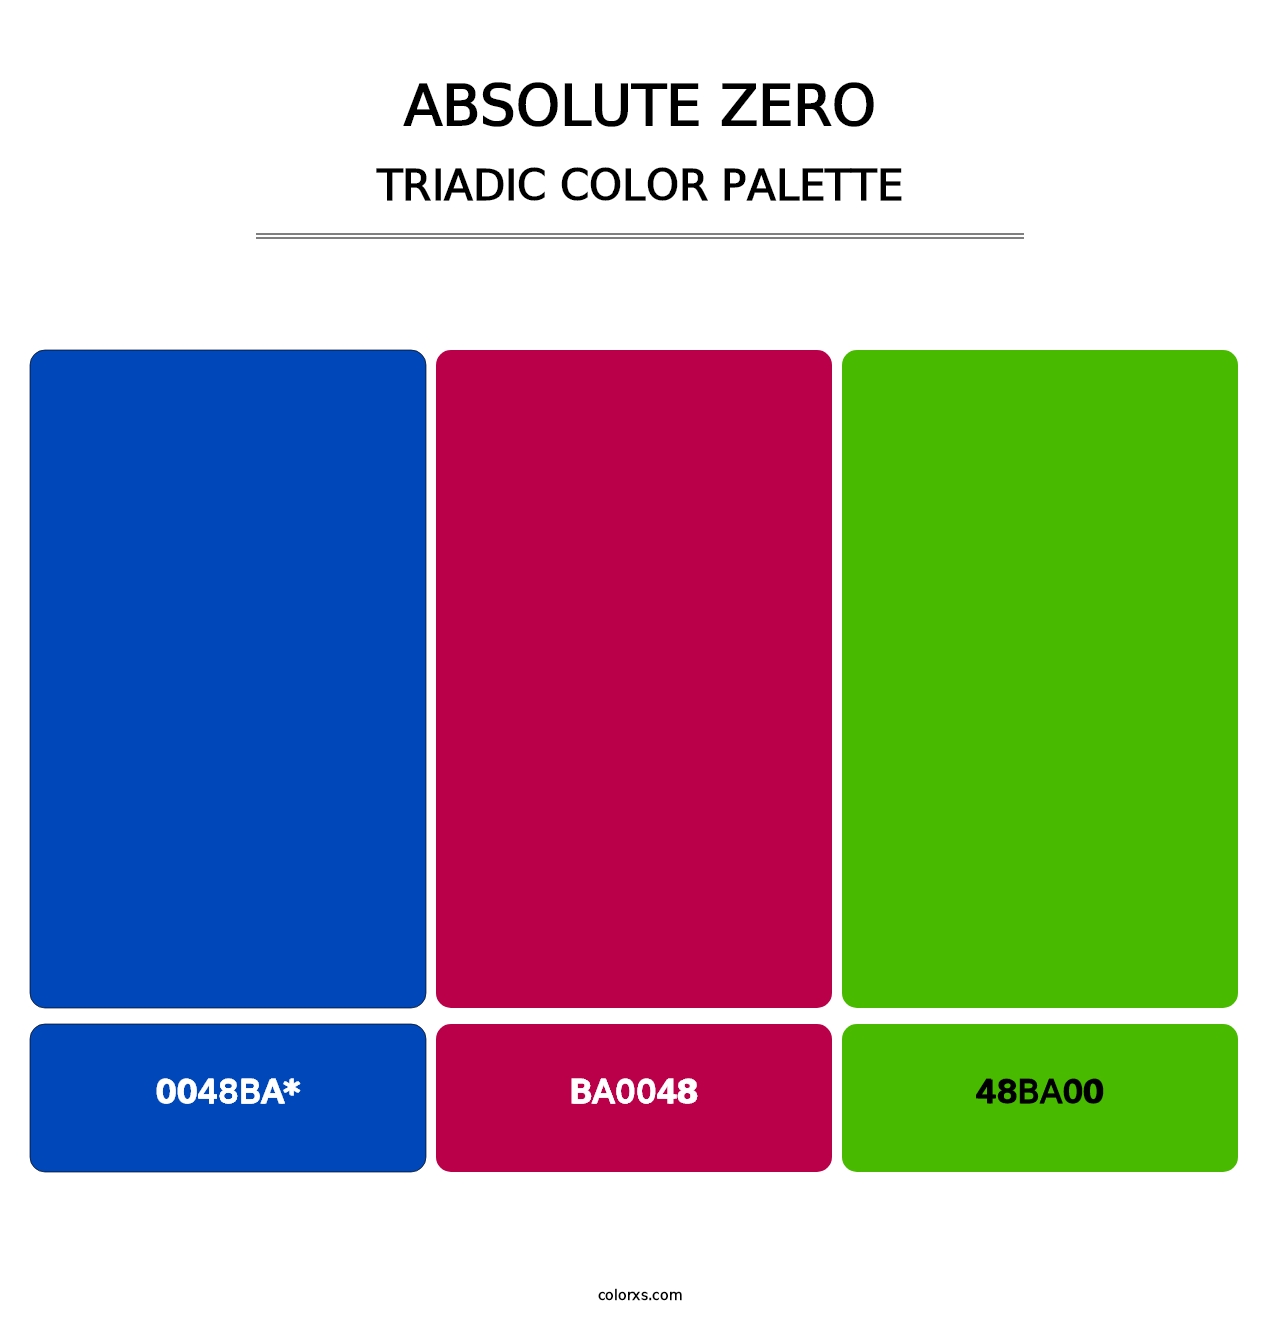 Absolute Zero - Triadic Color Palette